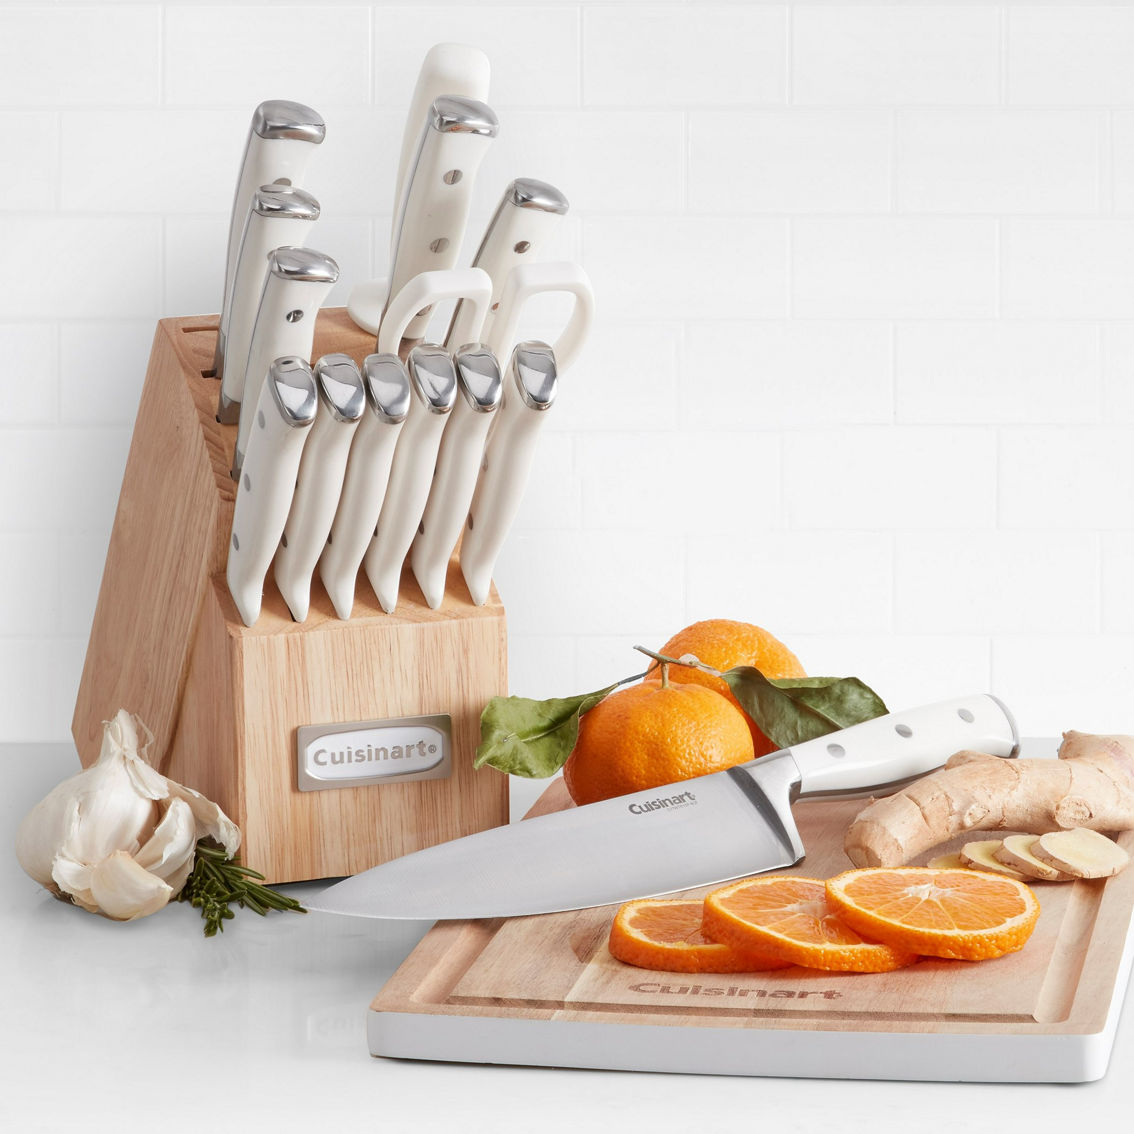 Cuisinart 15 pc. Triple Rivet Cutlery Block Set - Image 3 of 6